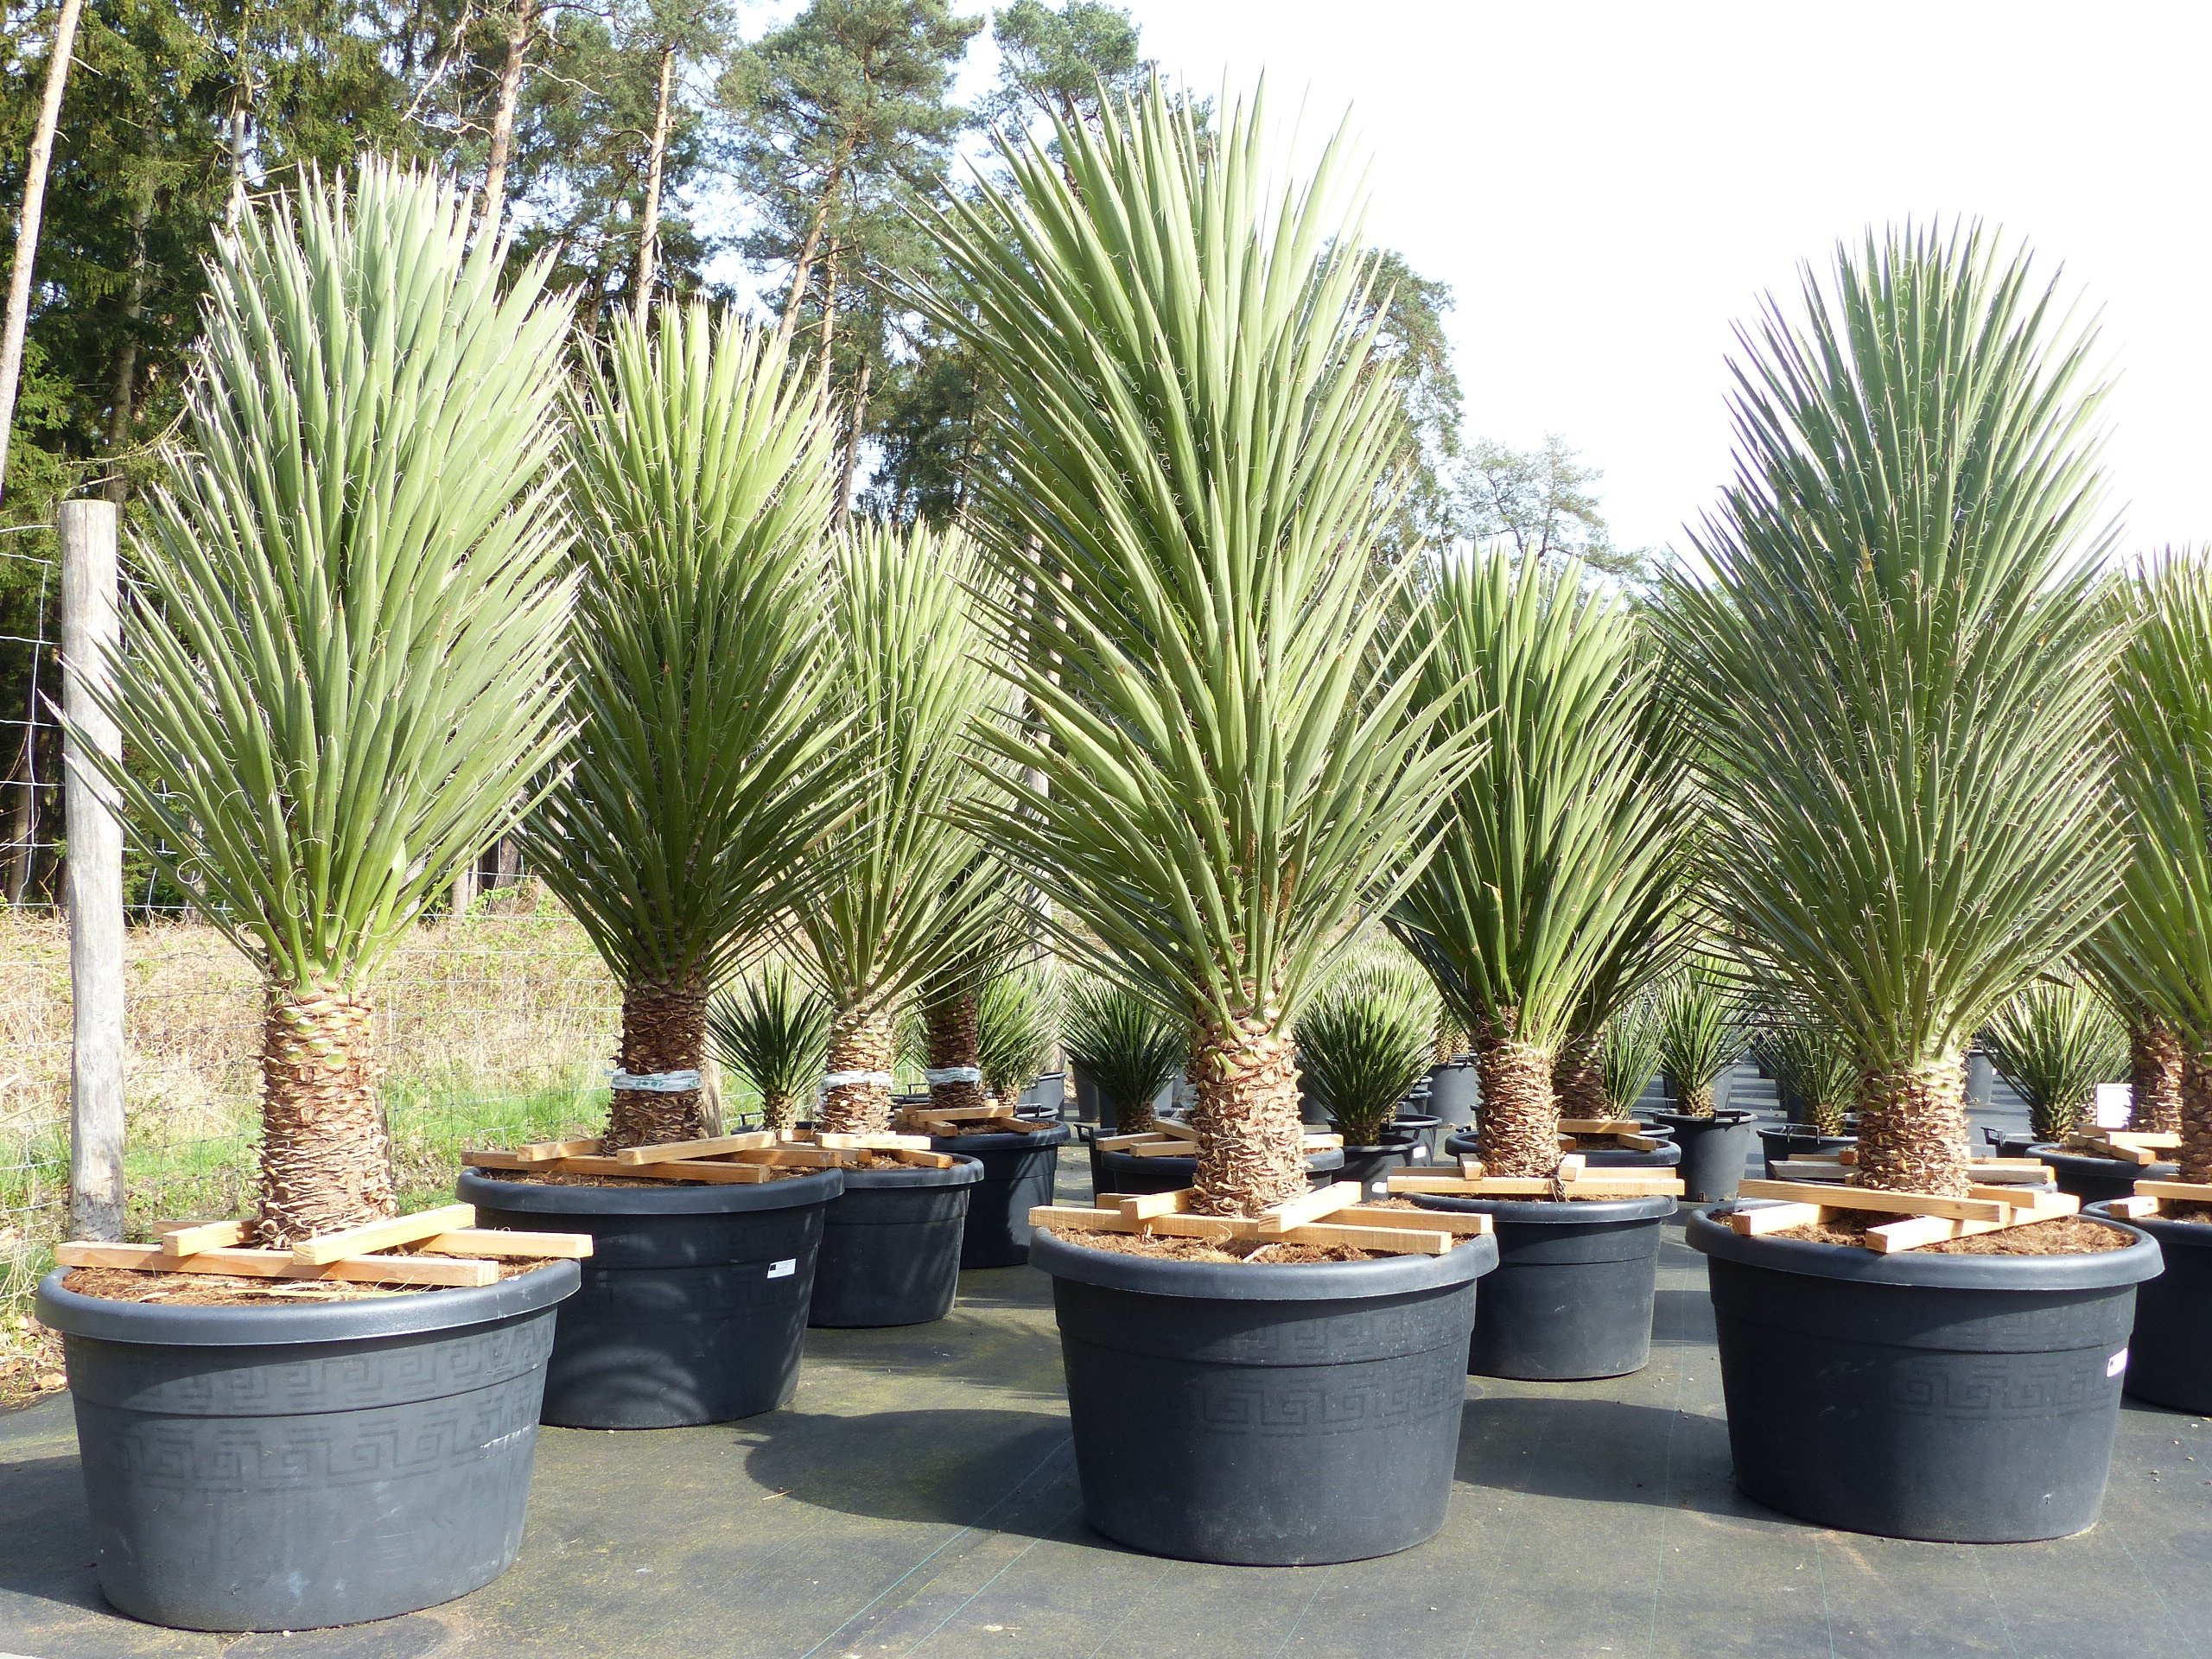 XXXL Yucca Palme Filifera, 230 - 250 cm, Stamm 40 - 50 cm, winterhart -13 Grad